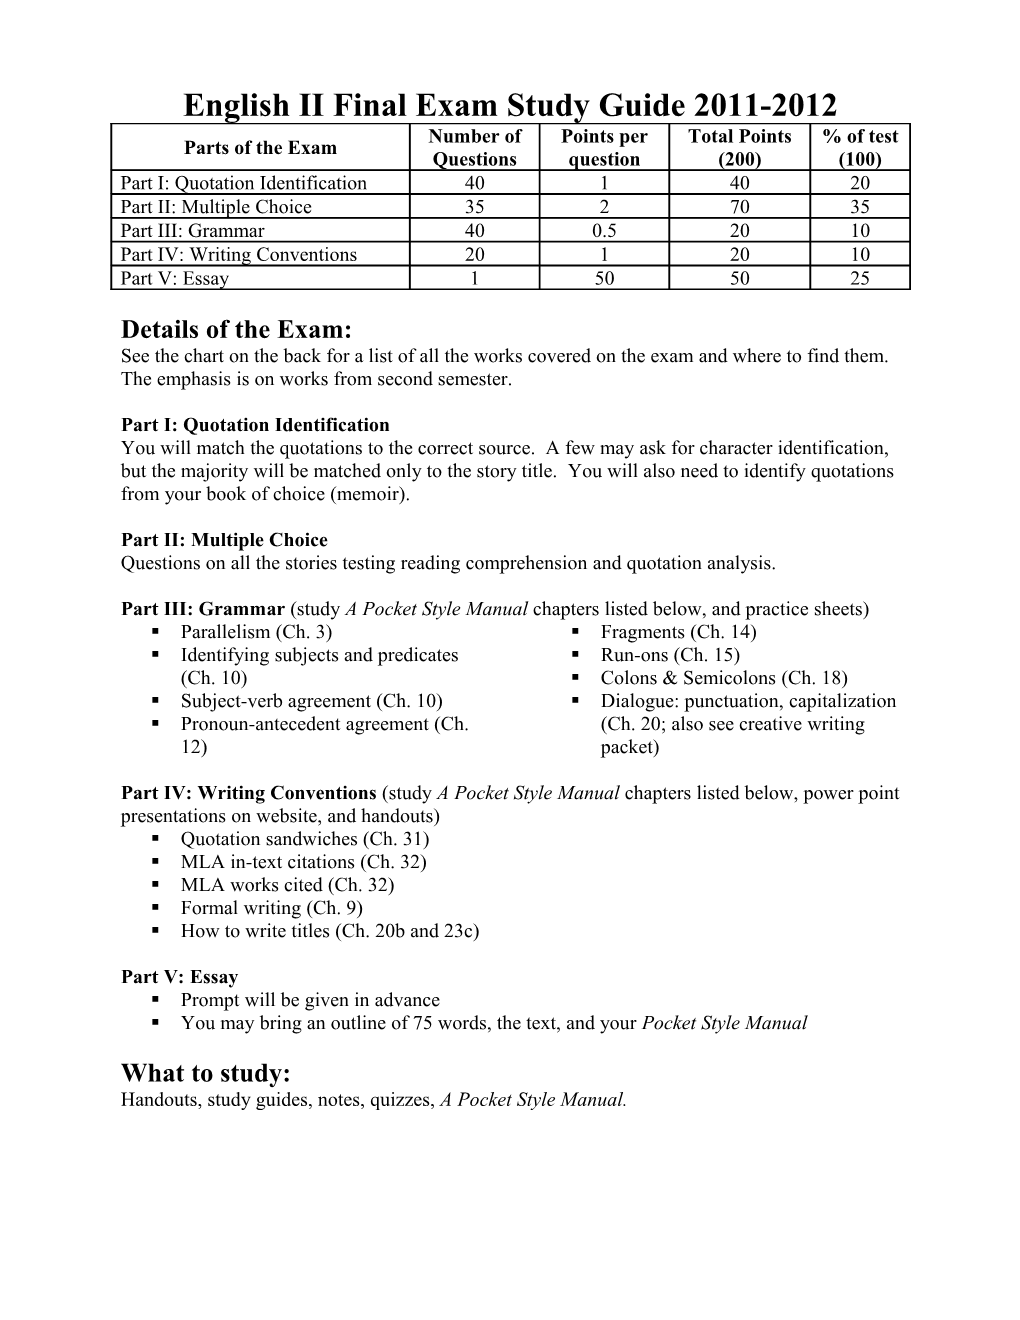 Honors English II Final Exam Study Guide 2010-2011